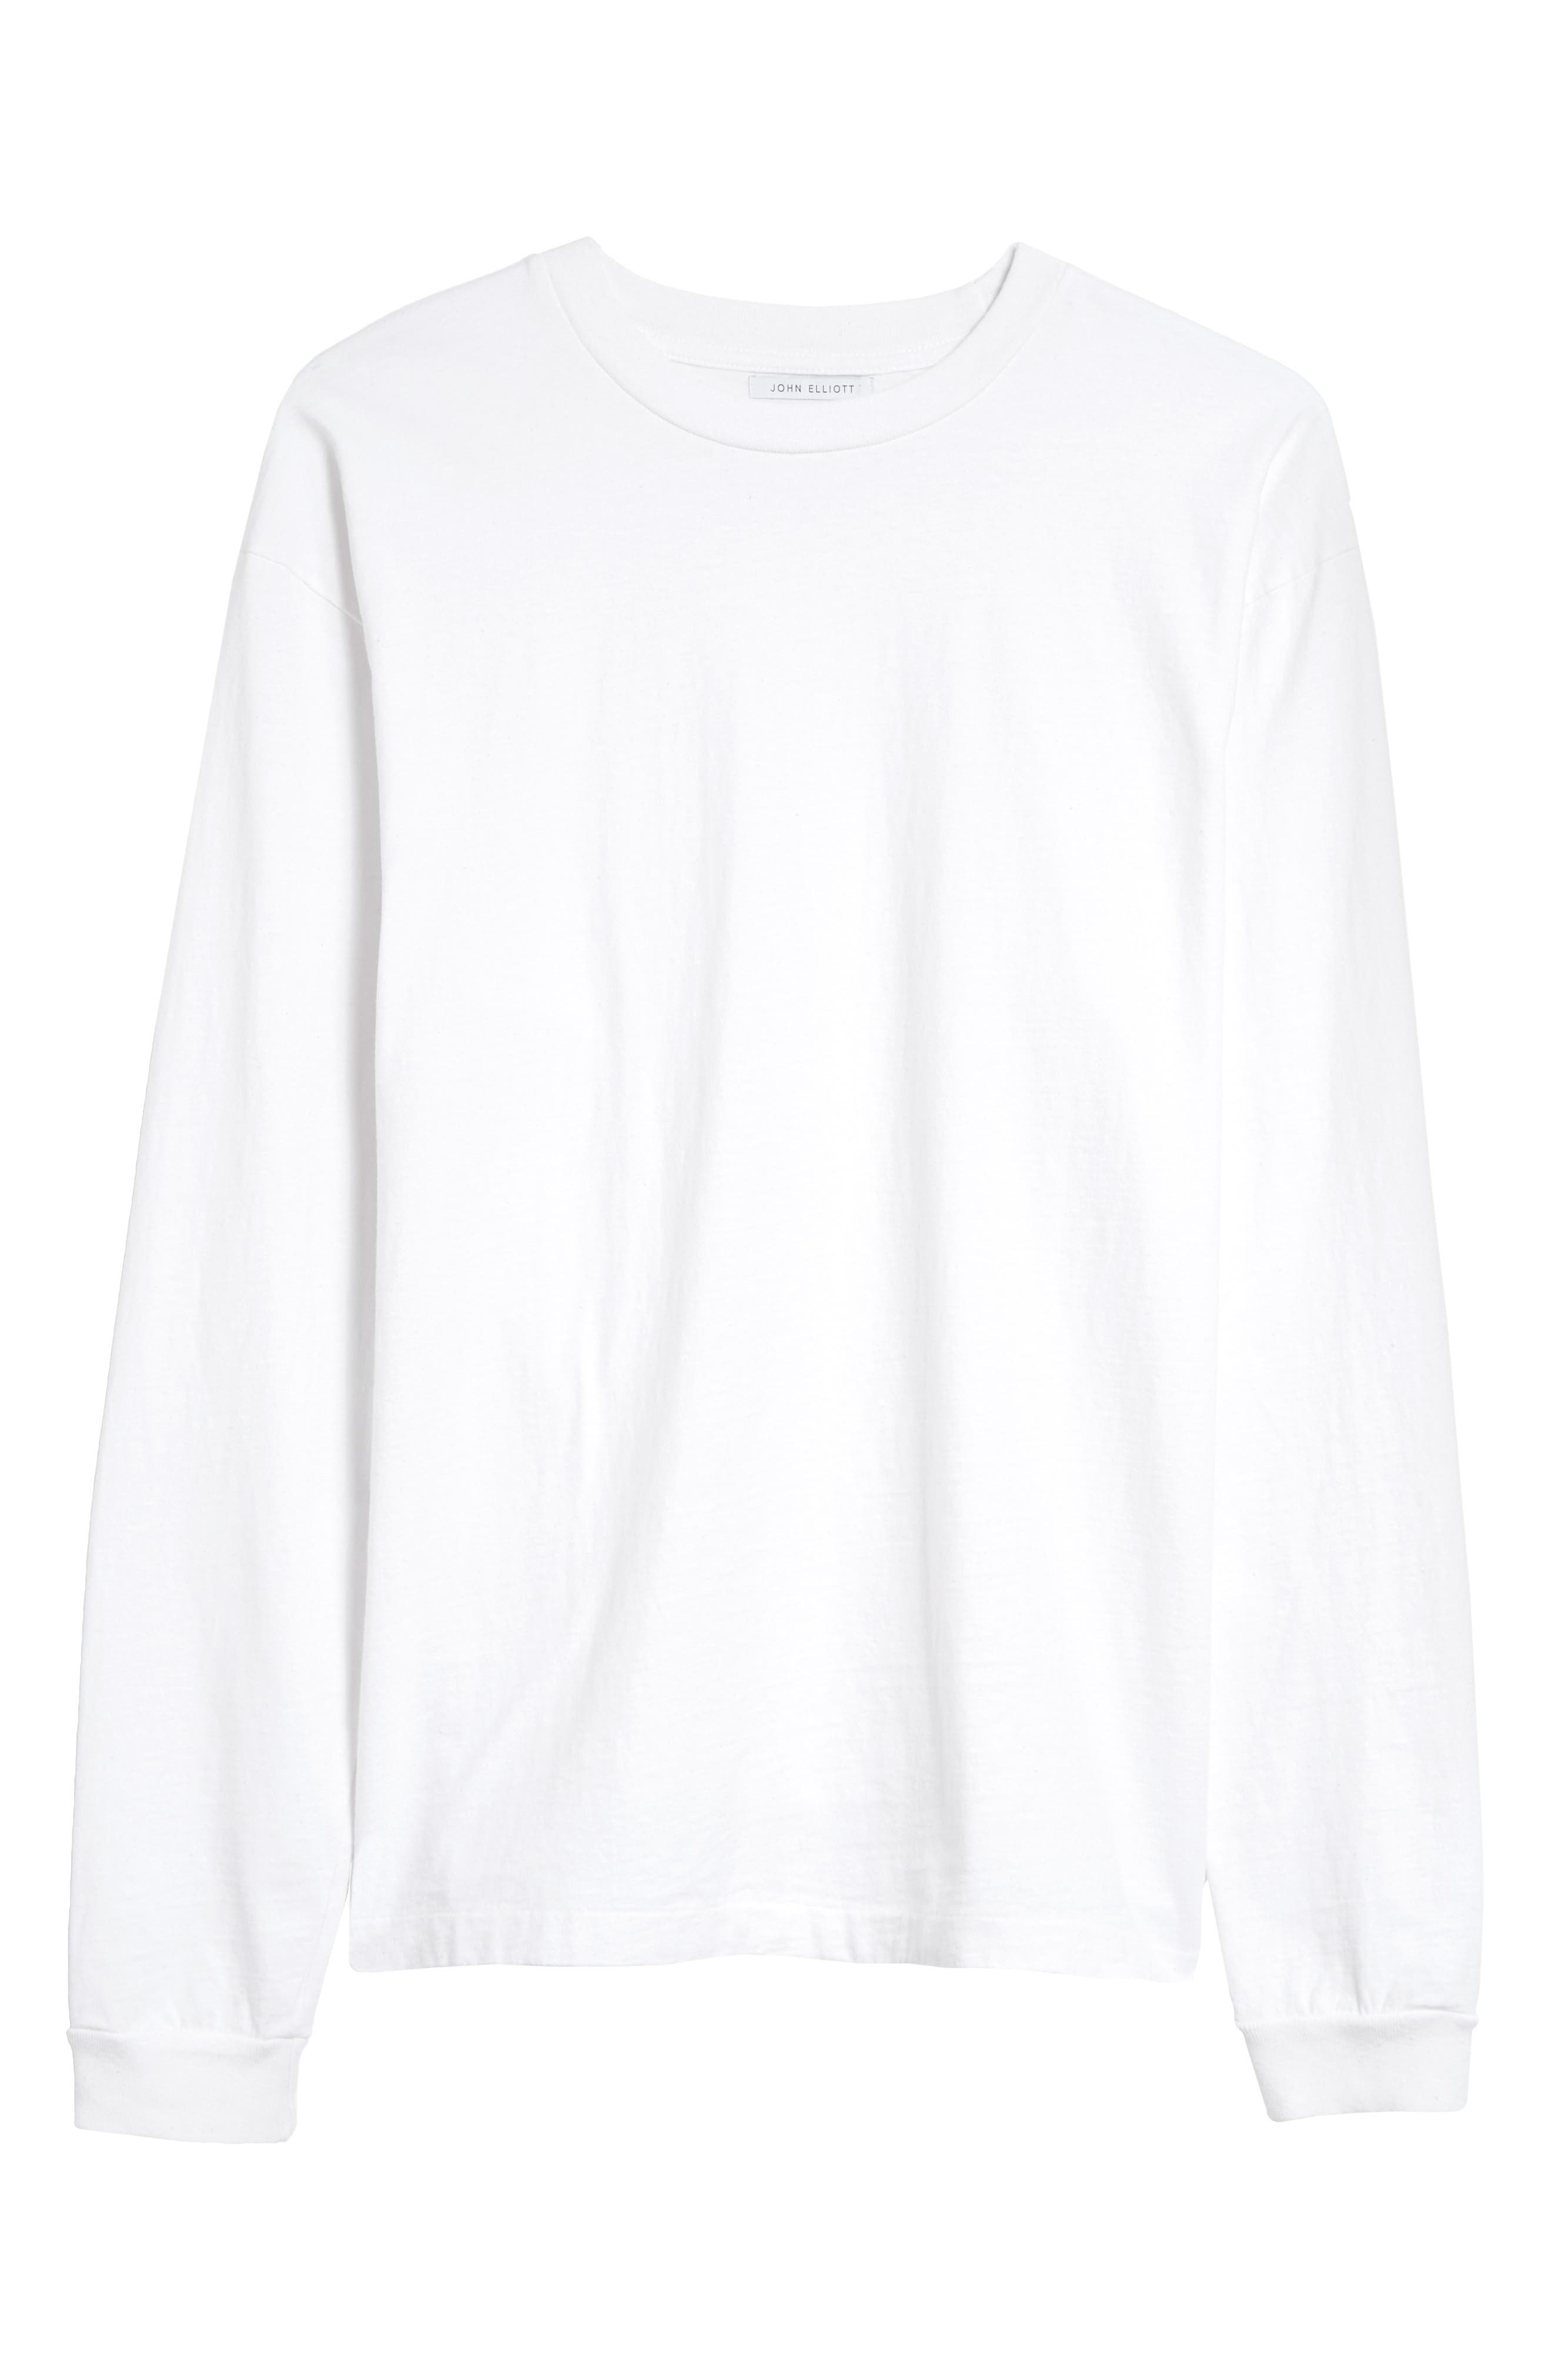 John Elliott University Long Sleeve Cotton T-Shirt in White at Nordstrom, Size X-Large